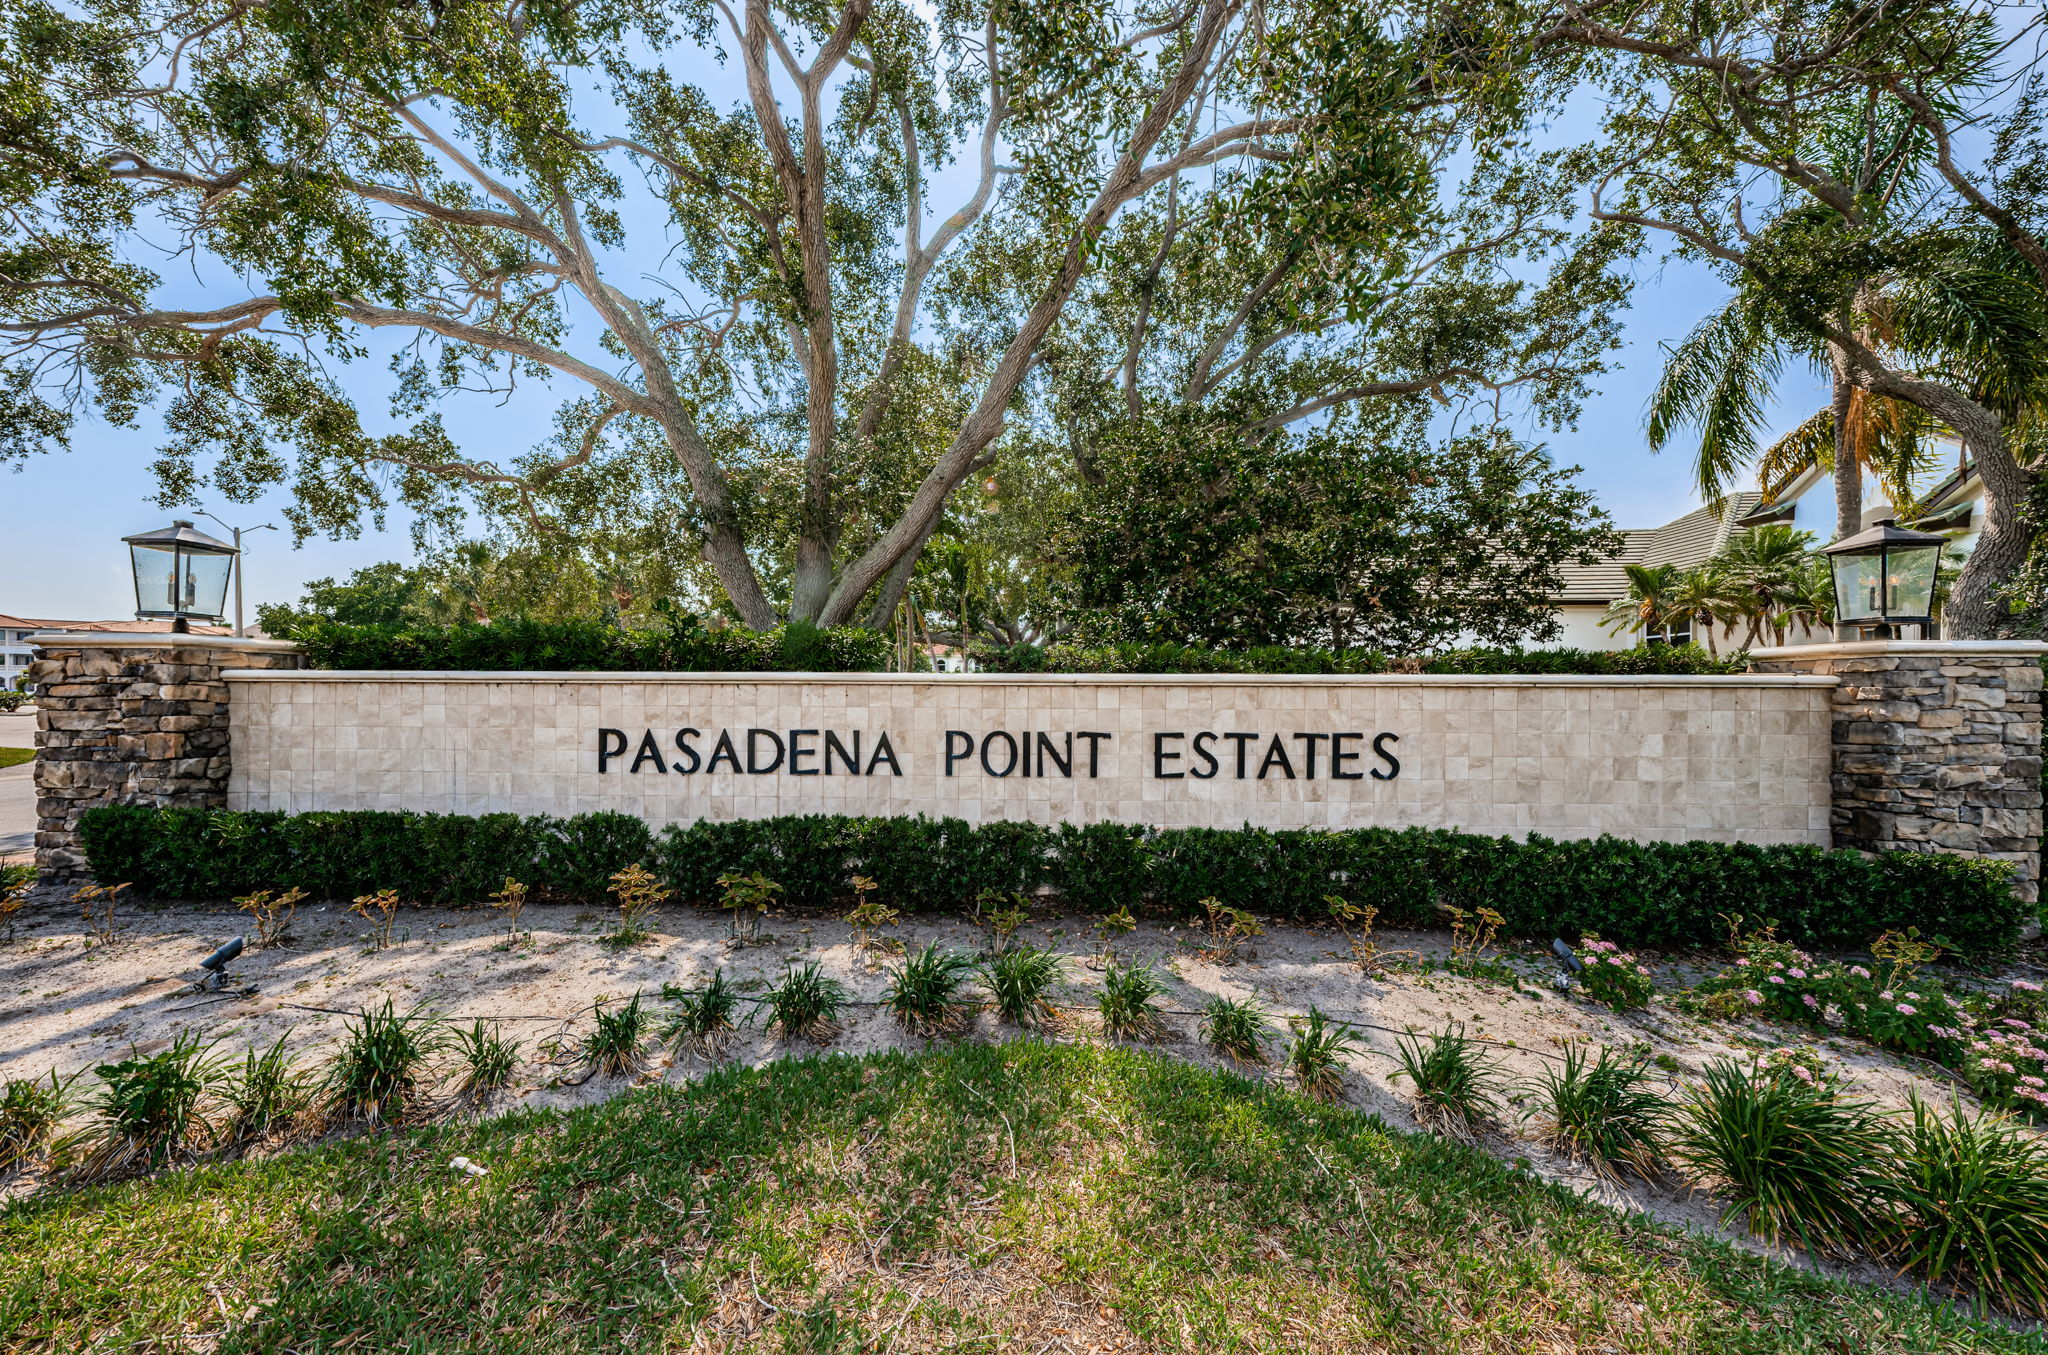 Pasadena Point1